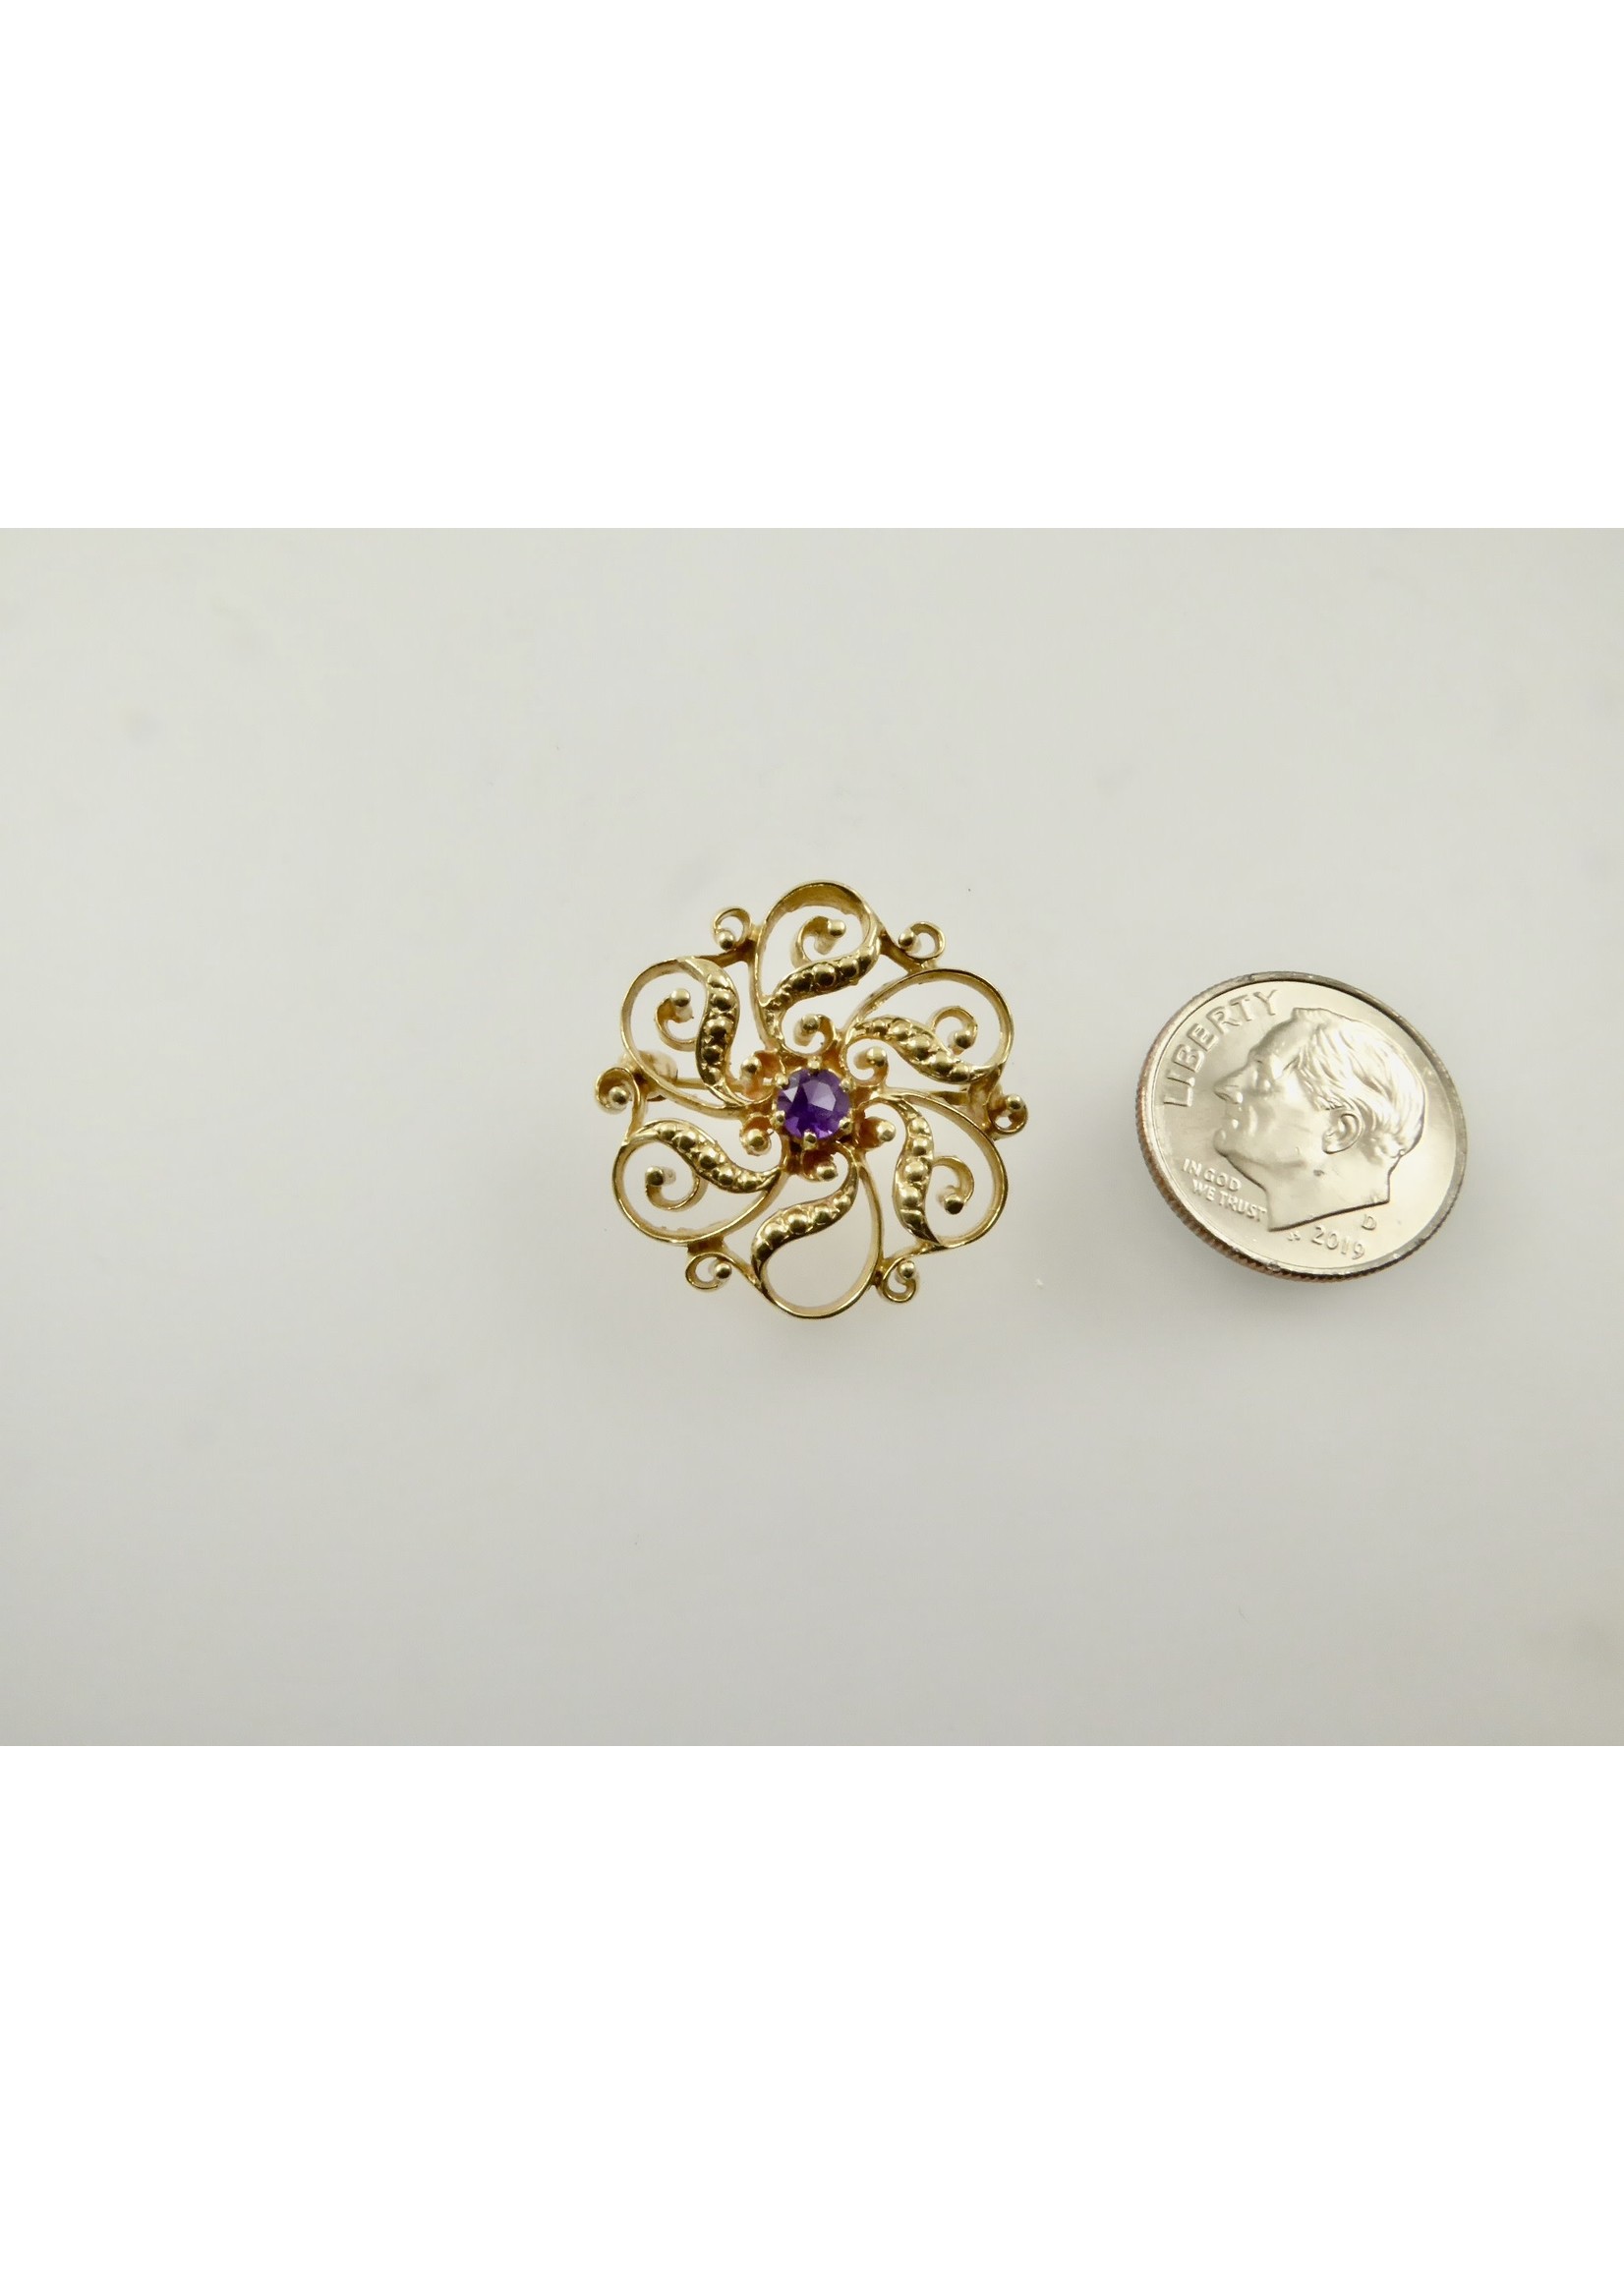 Lisa Kramer Vintage Jewelry Victorian Revival Brooch with Amethyst